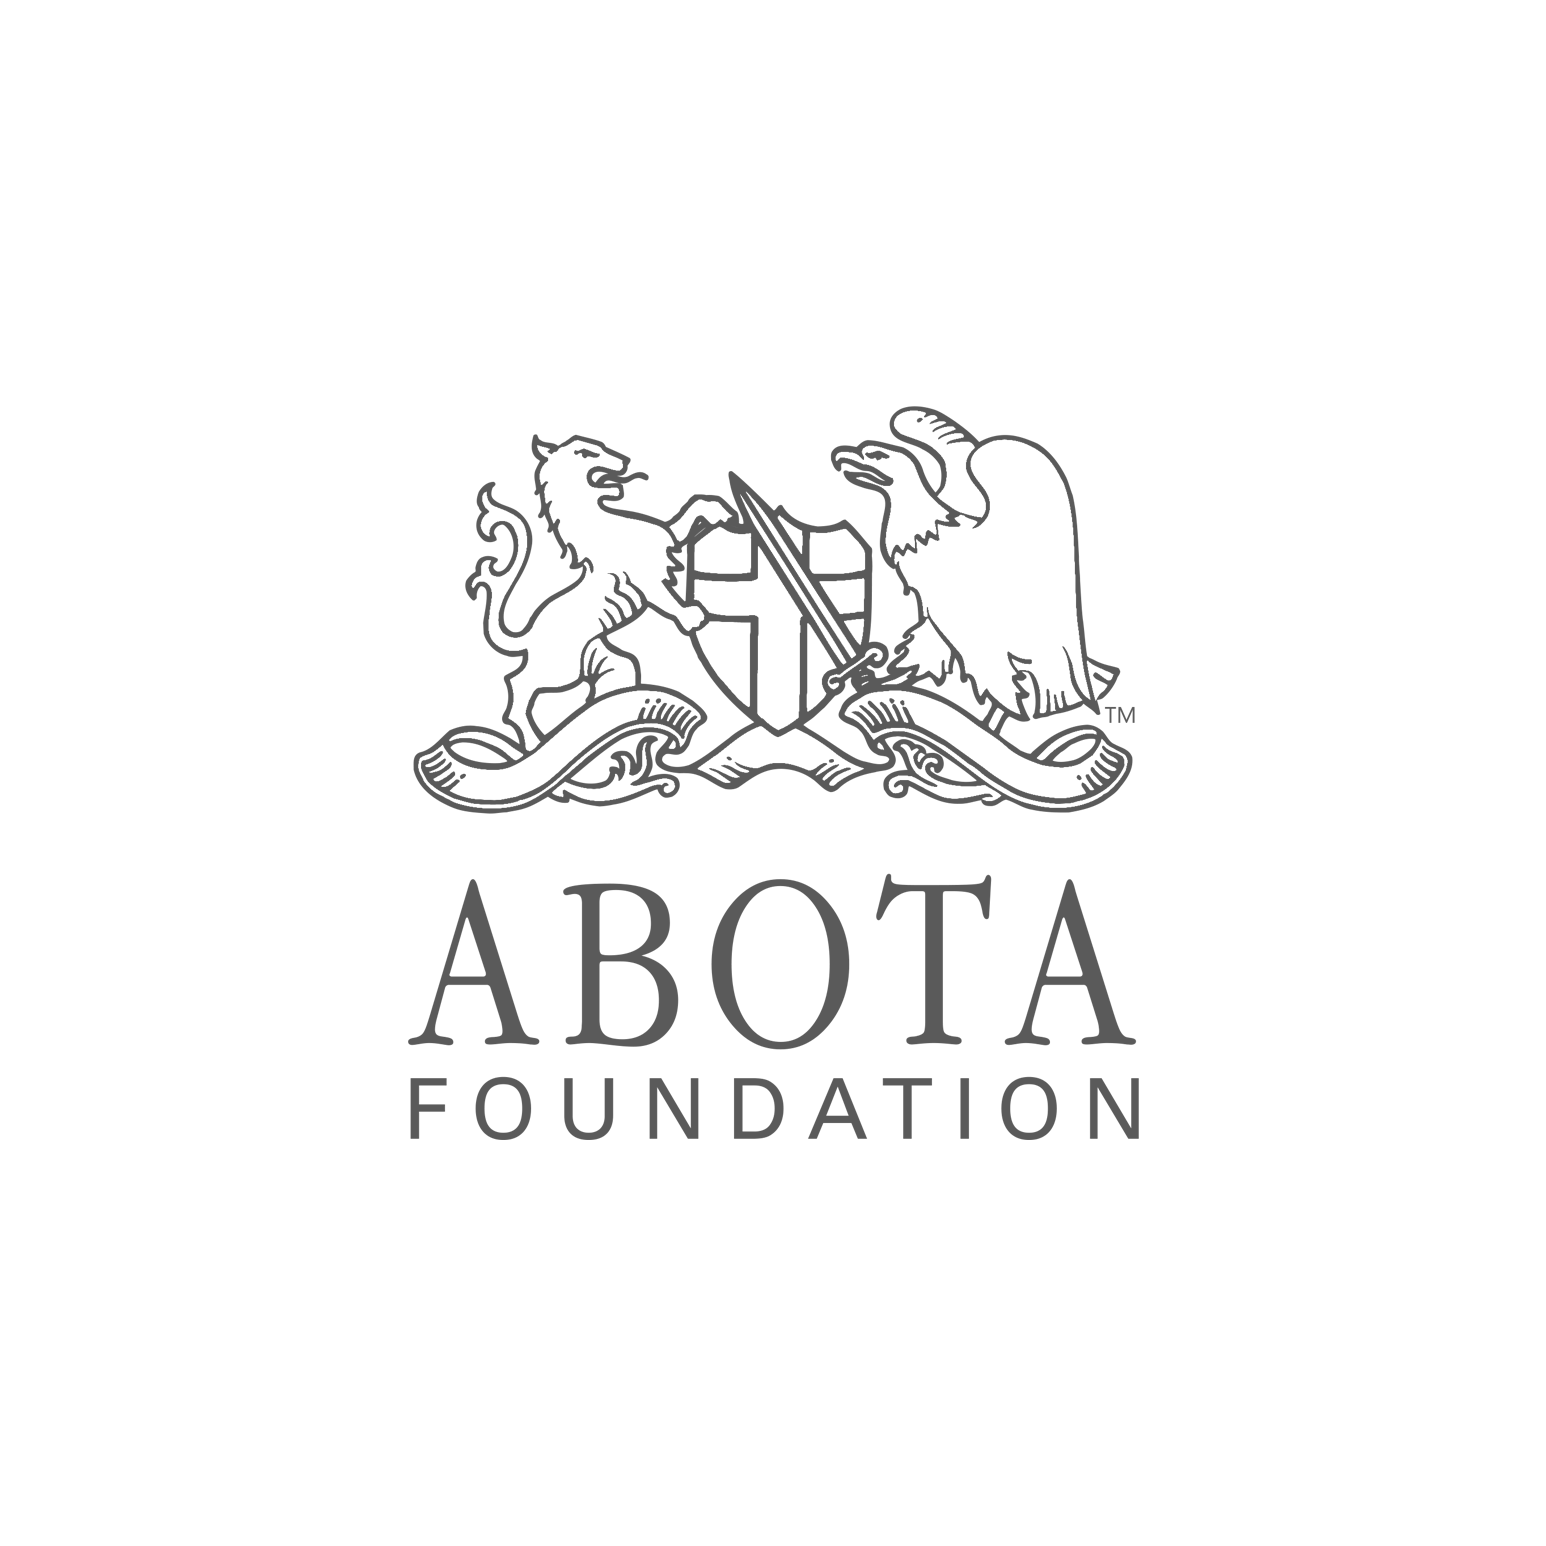 Abota Logo - ABOTA Foundation Archives RENEWAL NETWORK